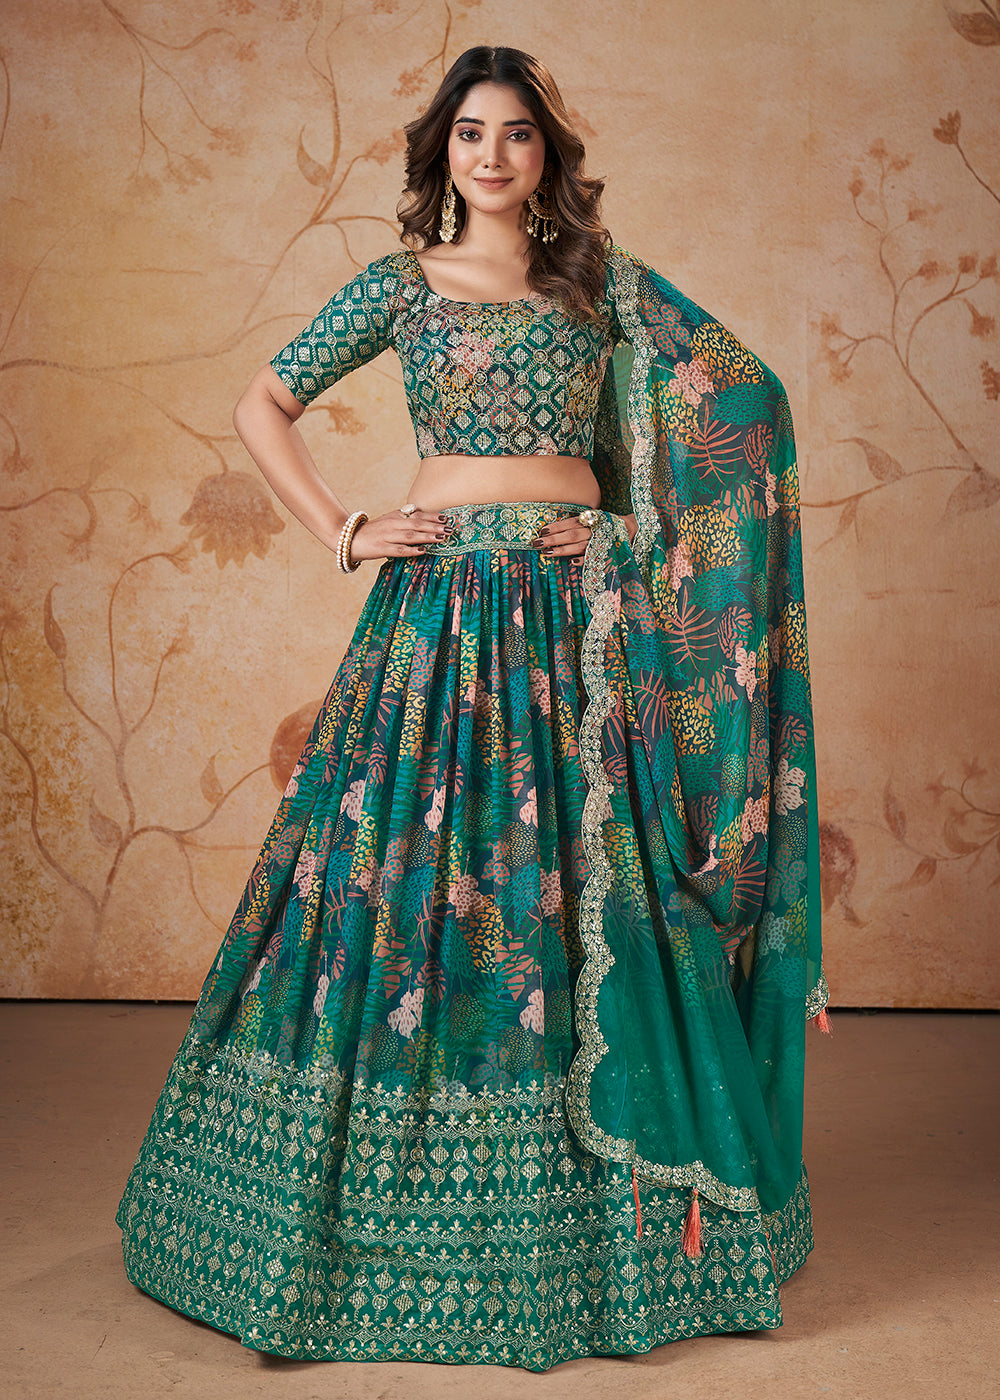 Buy Now Rama Digital Print & Sequins Wedding Festive Lehenga Choli Online in USA, UK, Canada & Worldwide at Empress Clothing.